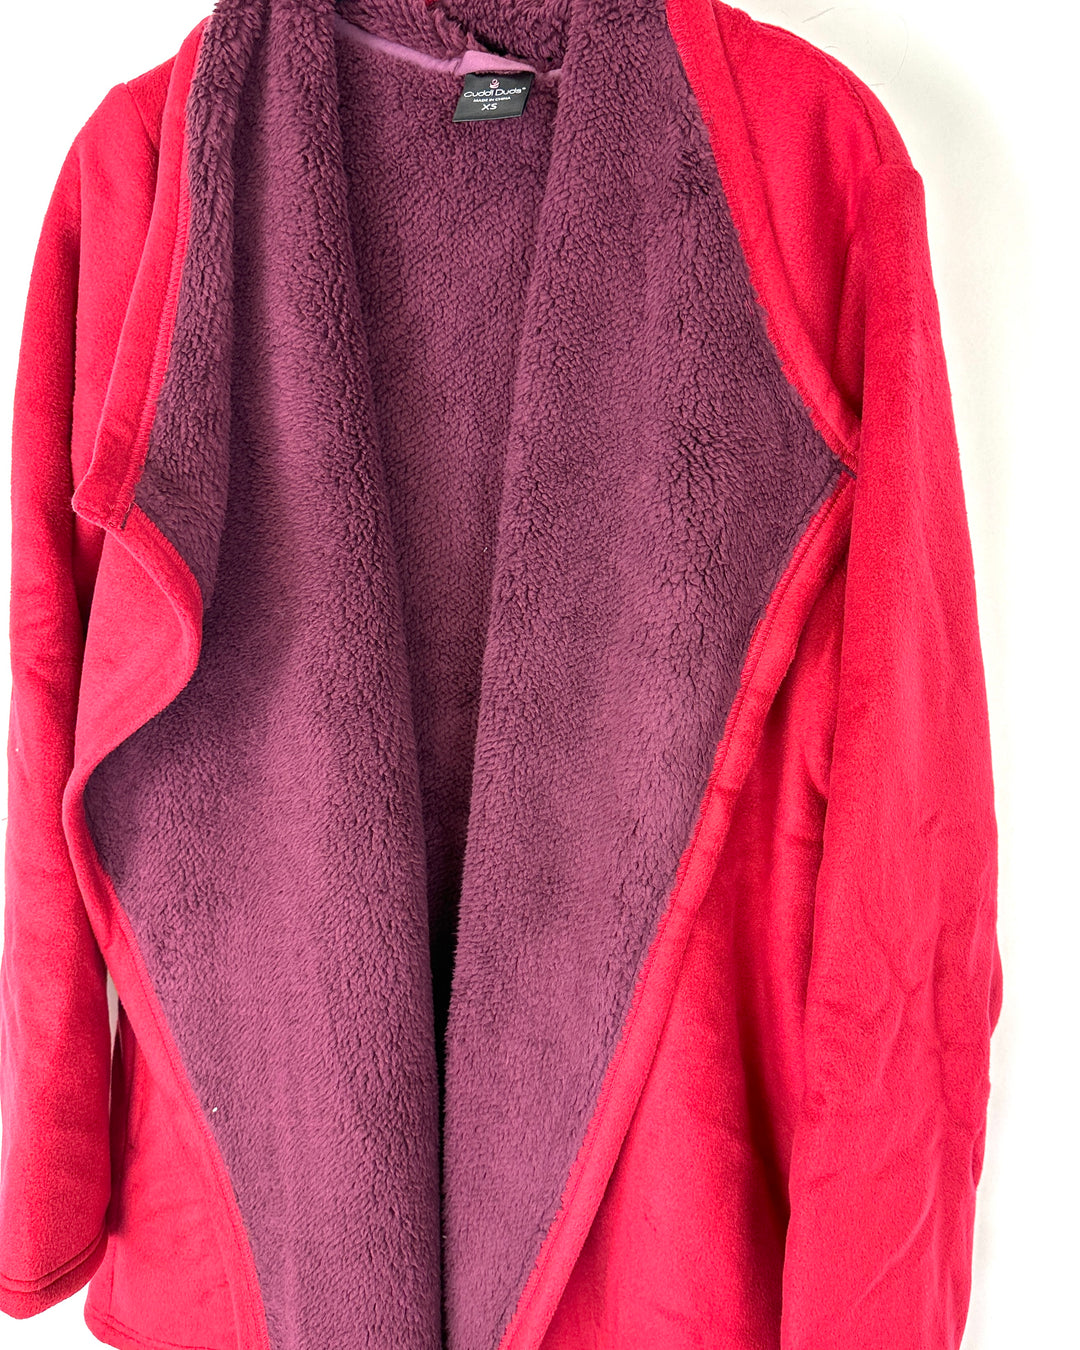 Red Fleece Cardigan - Extra Small And Medium